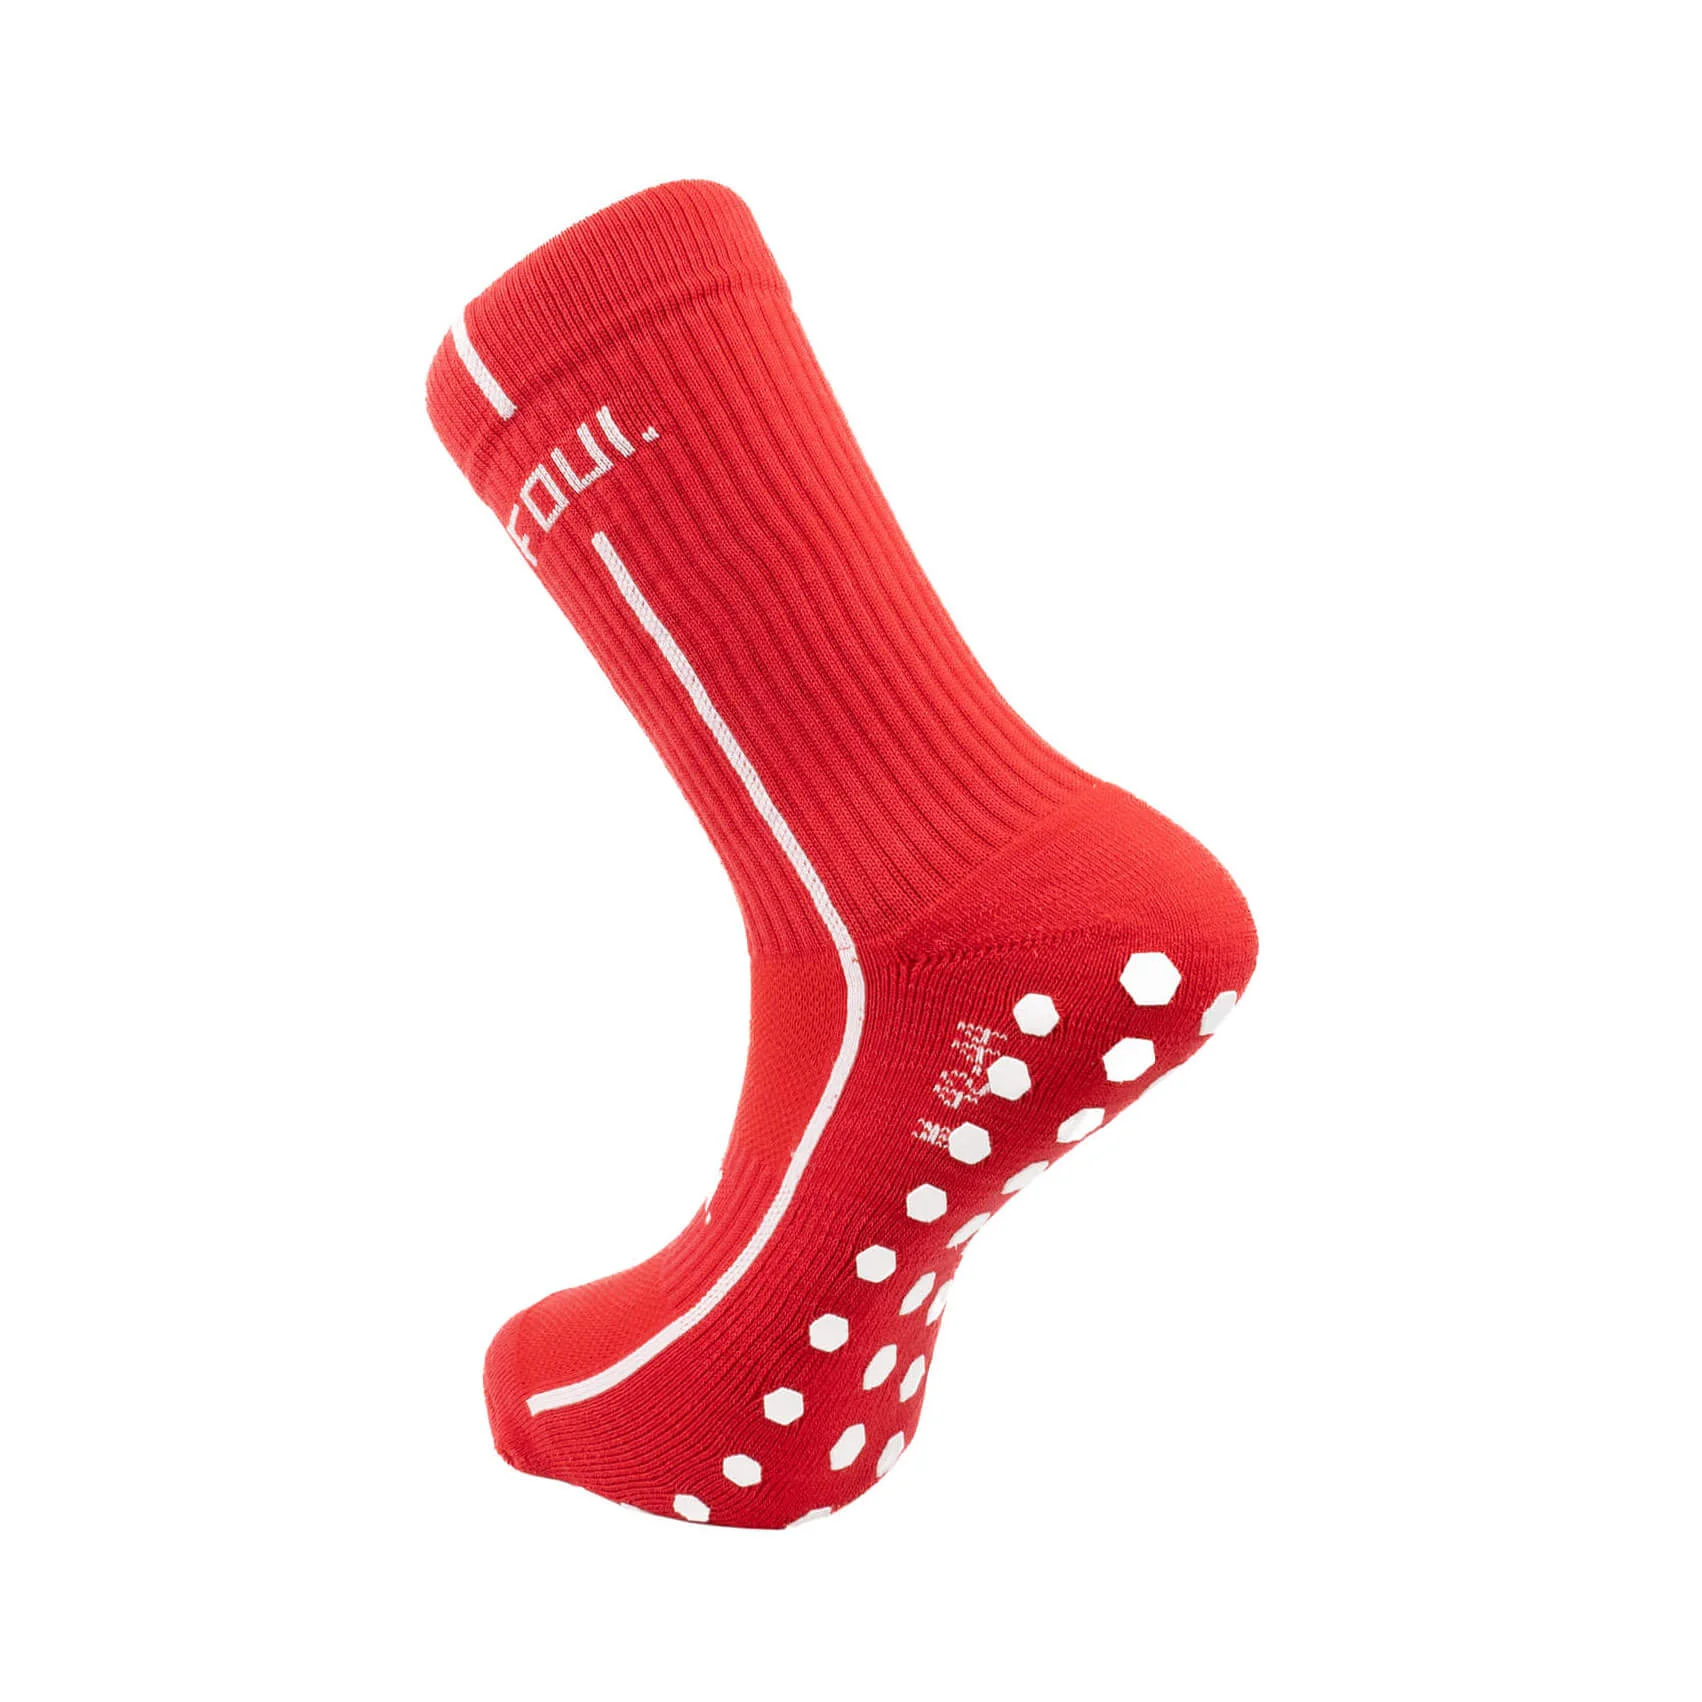 FOUL - FOUL football grip socks 🧦💥 With ID